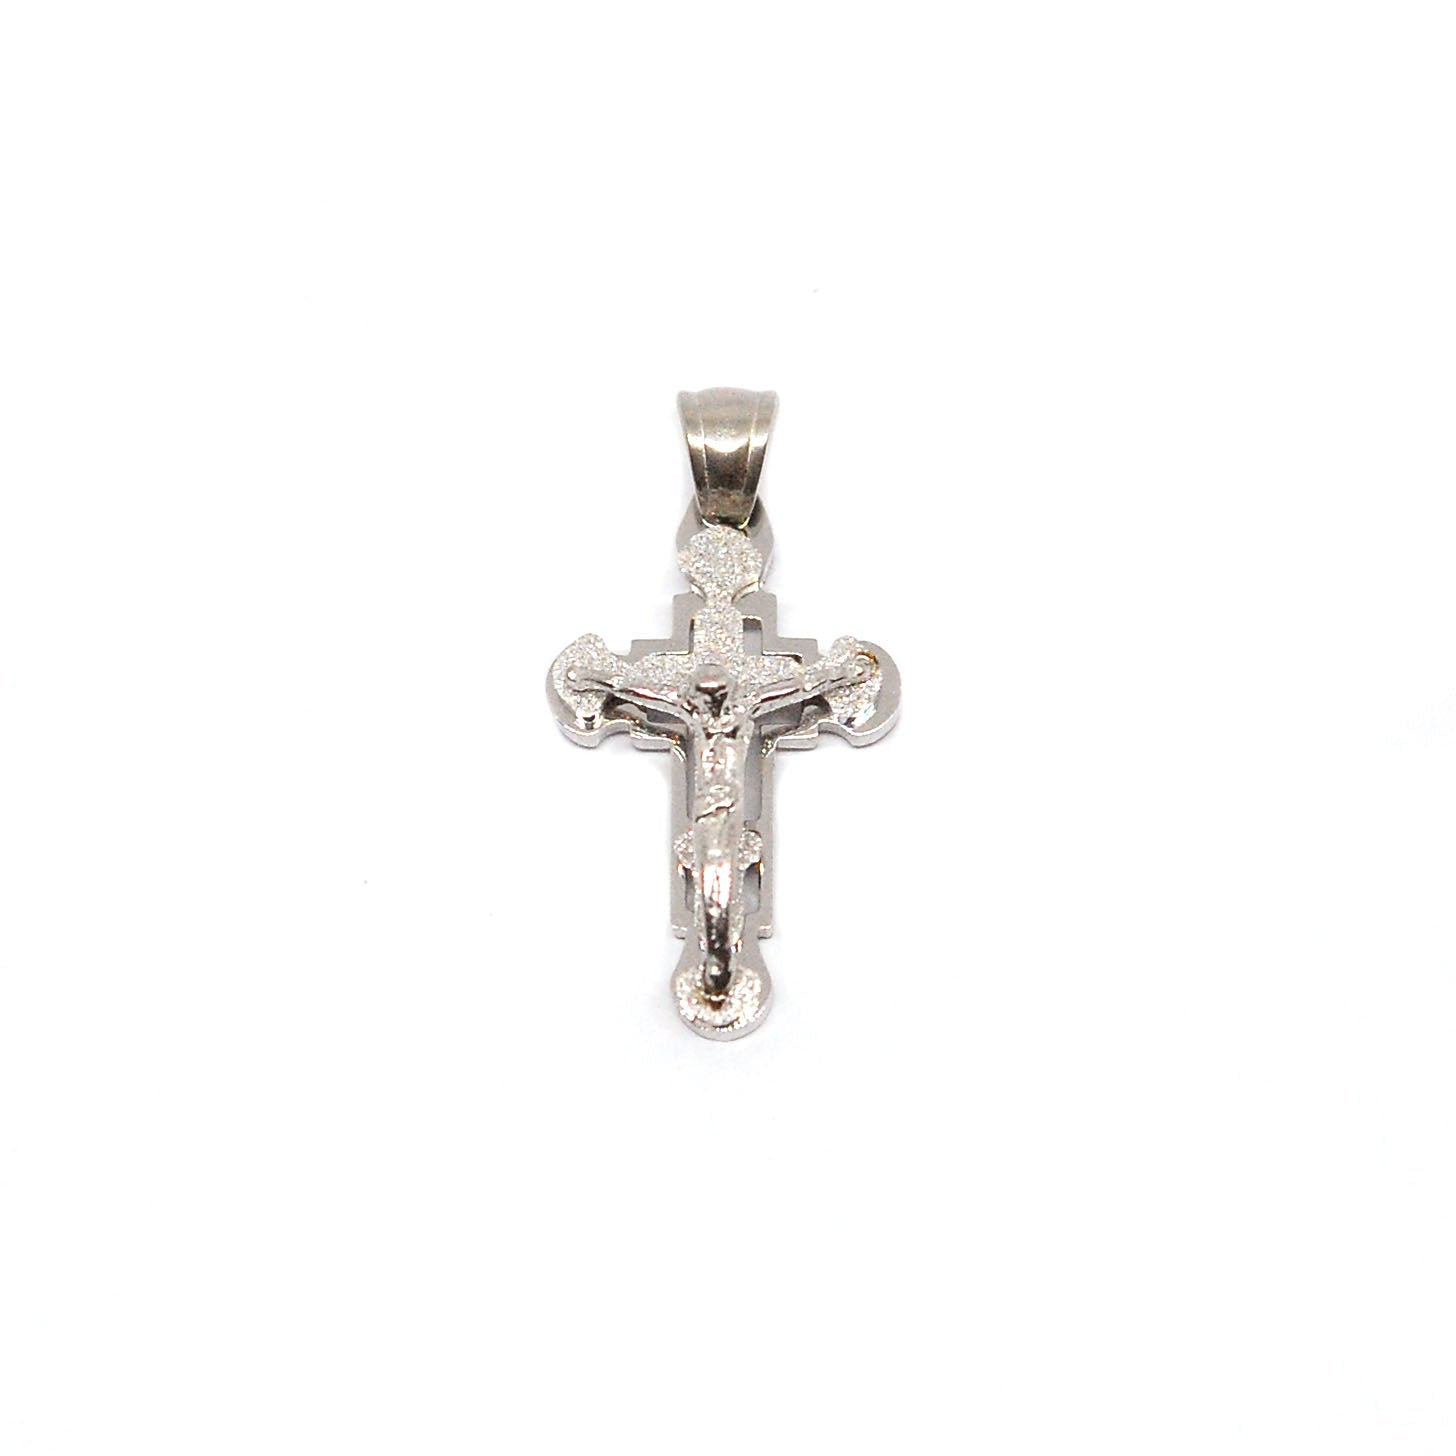 ESP 8059: S/S SB Jesus Christ Crucifix w/ Glossy Edges